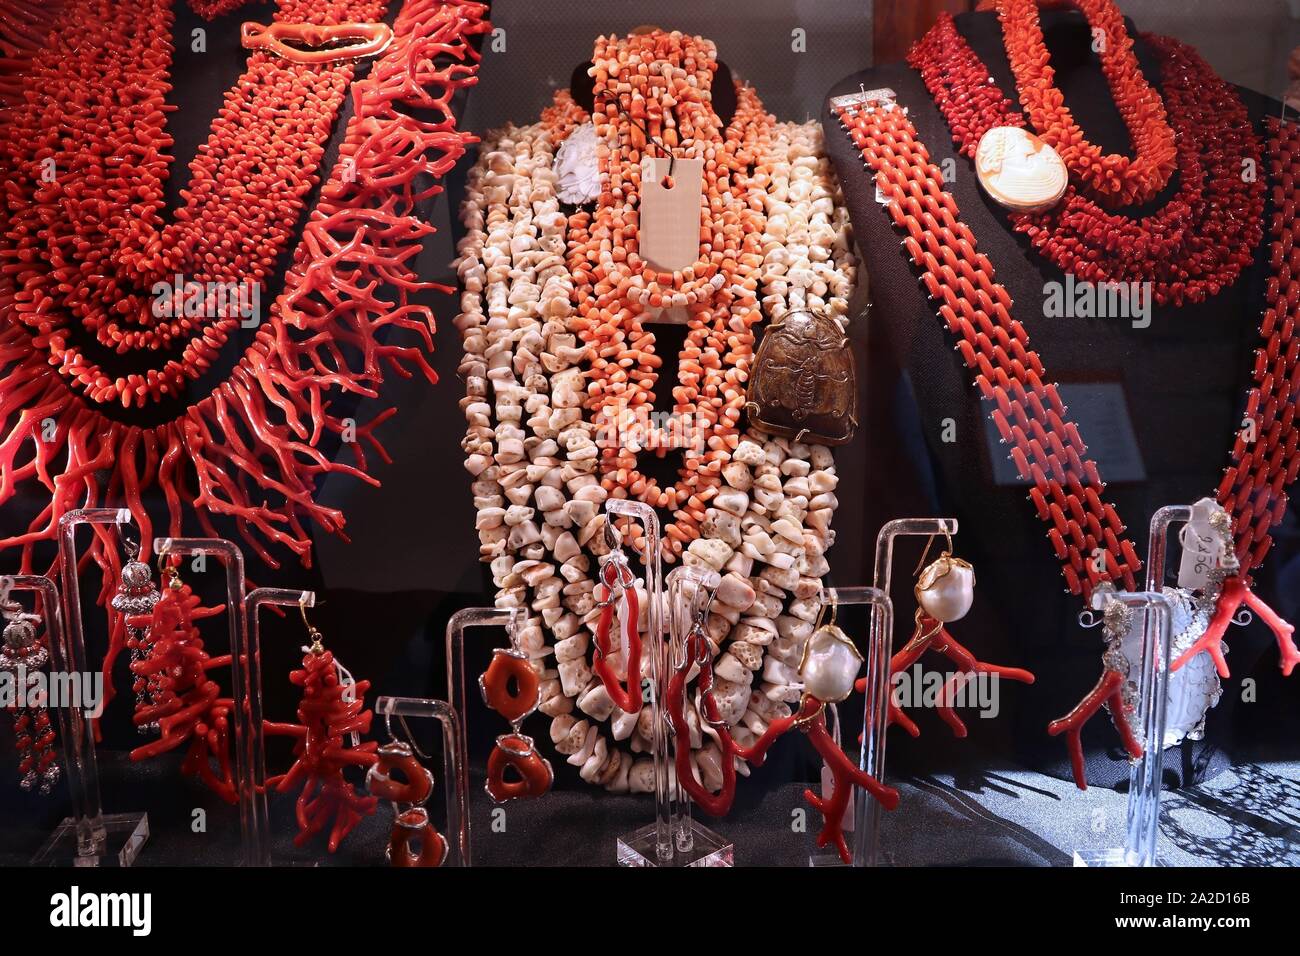 https://c8.alamy.com/comp/2A2D16B/coral-jewellery-in-croatia-jewelry-store-window-display-in-korcula-2A2D16B.jpg